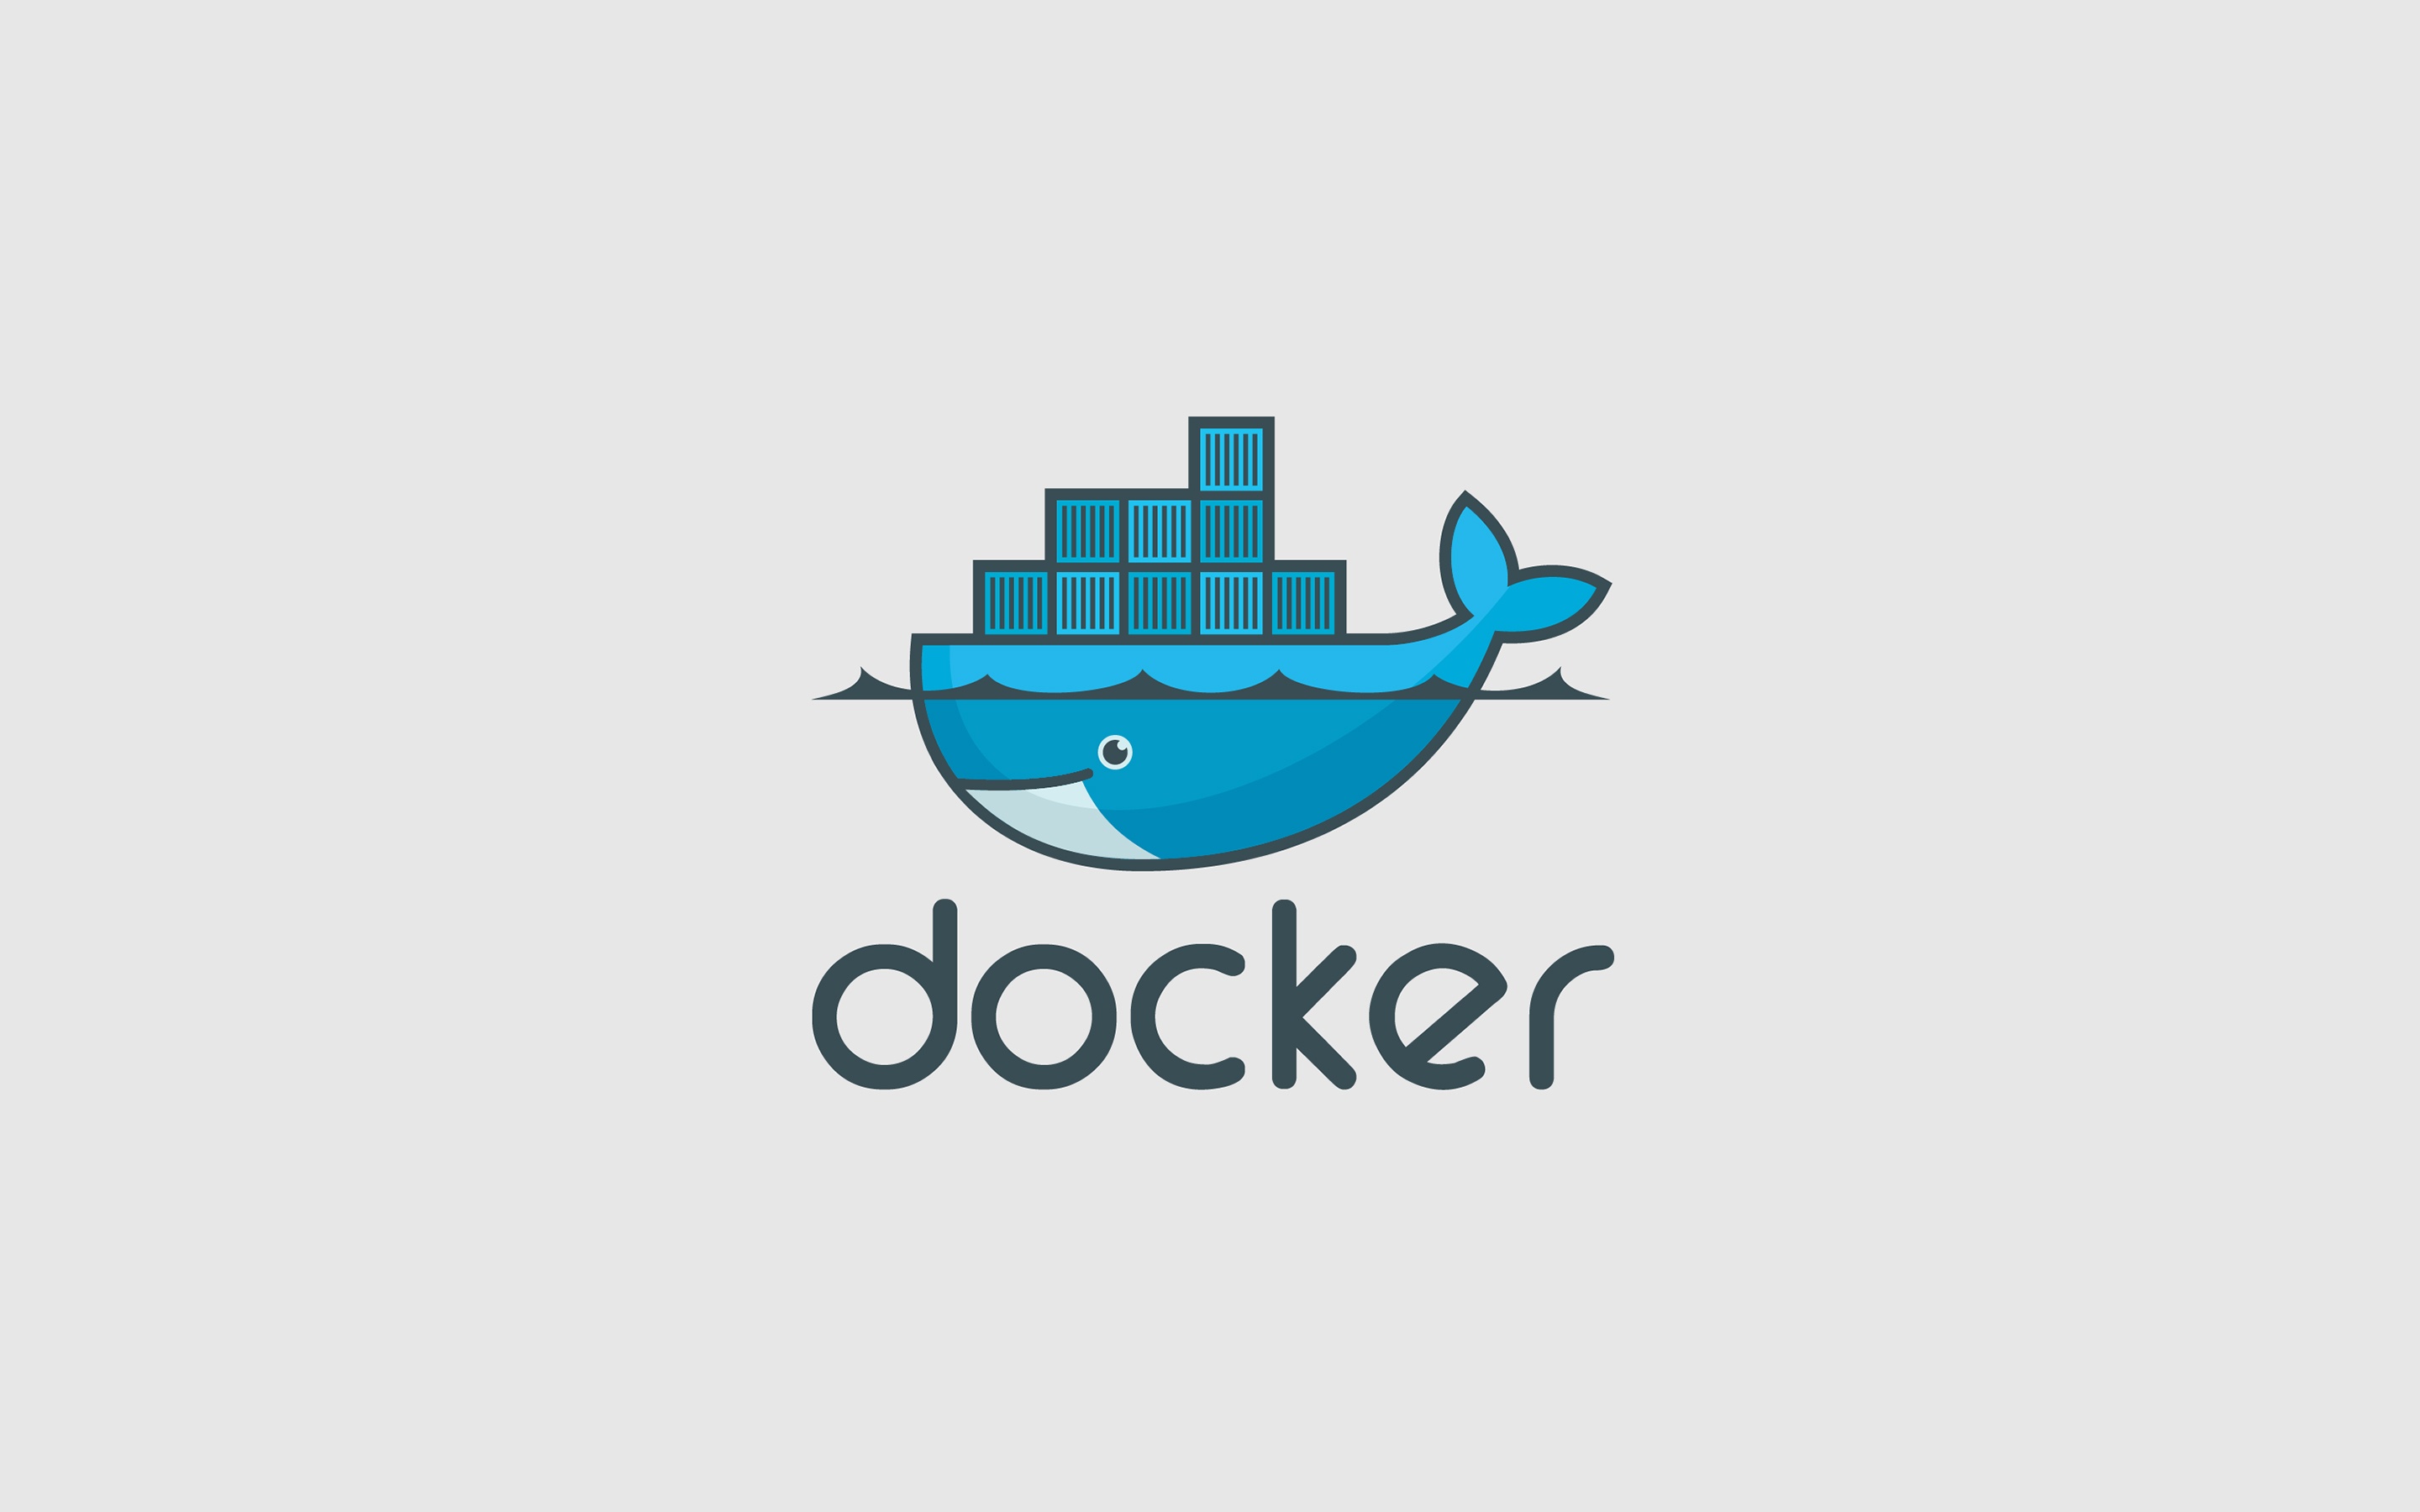 List of useful Docker commands